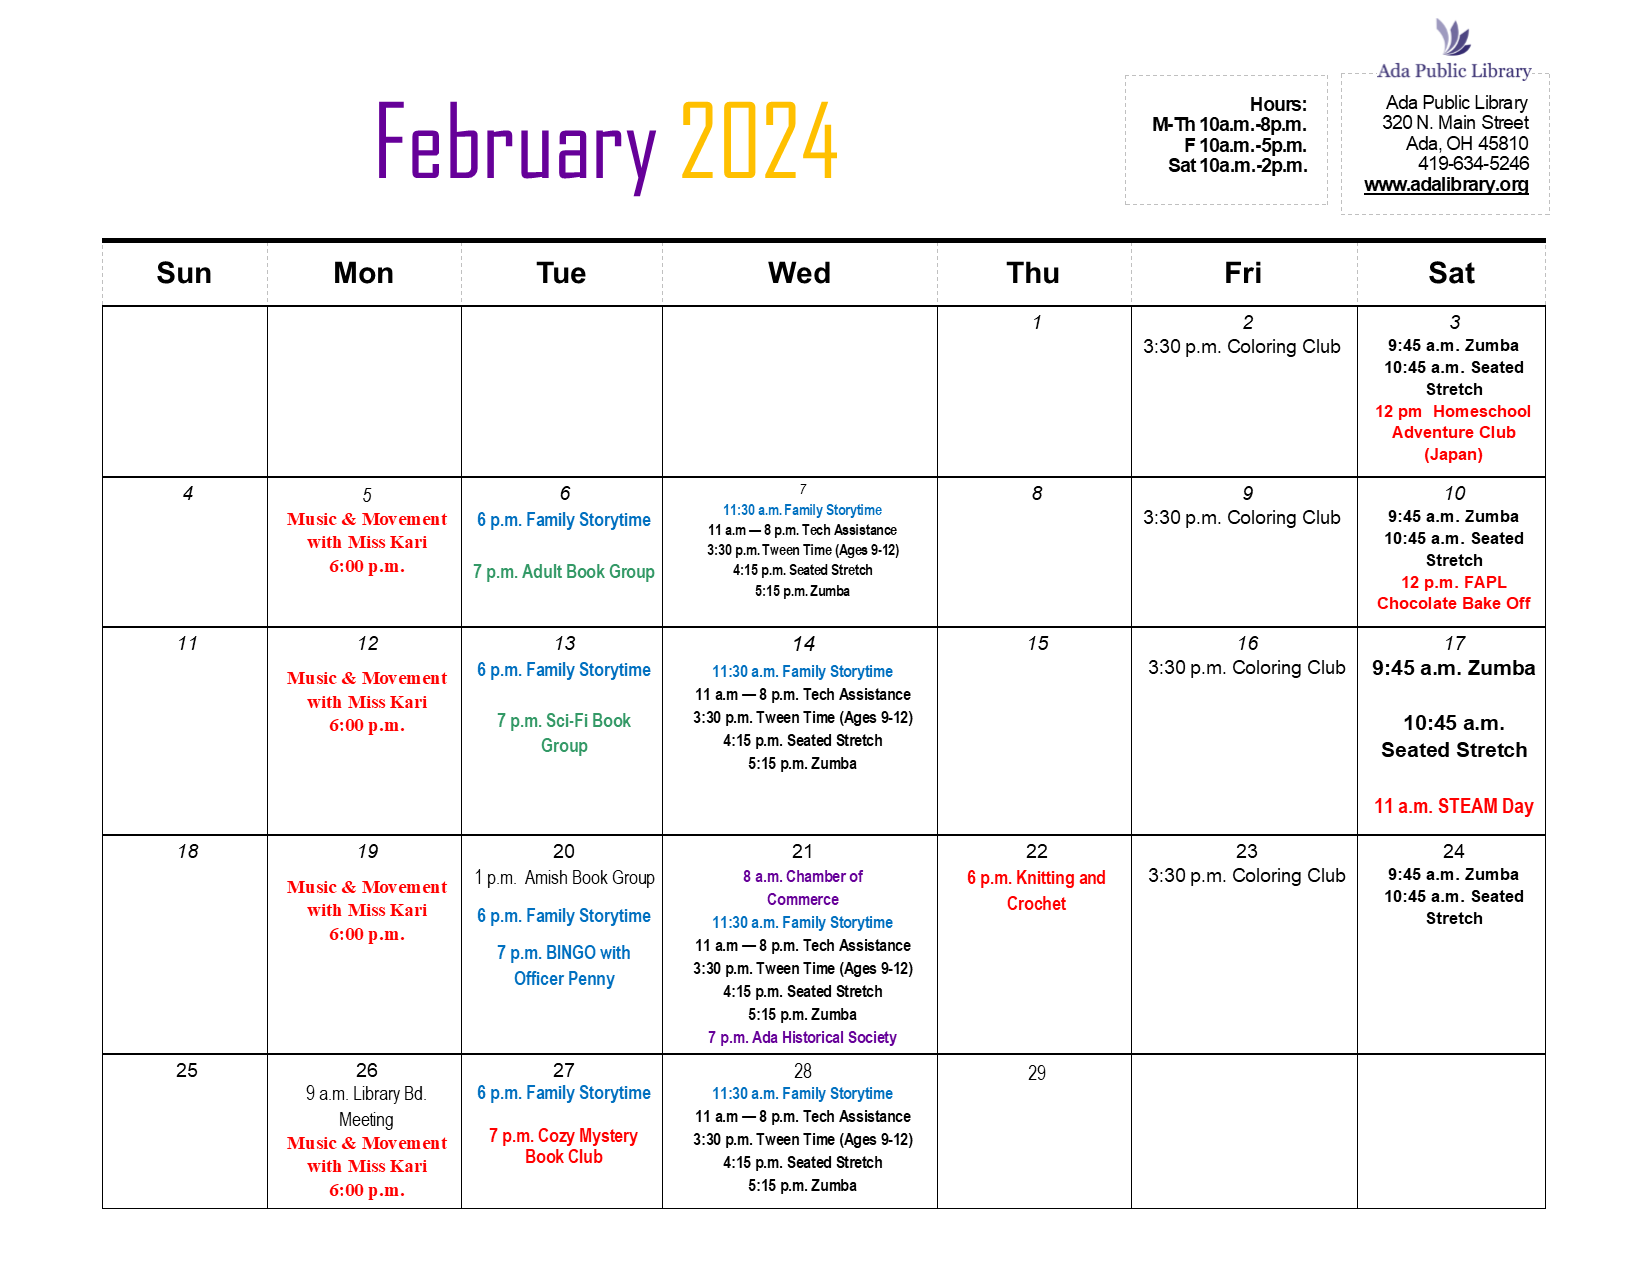 "February Calendar of Activities"